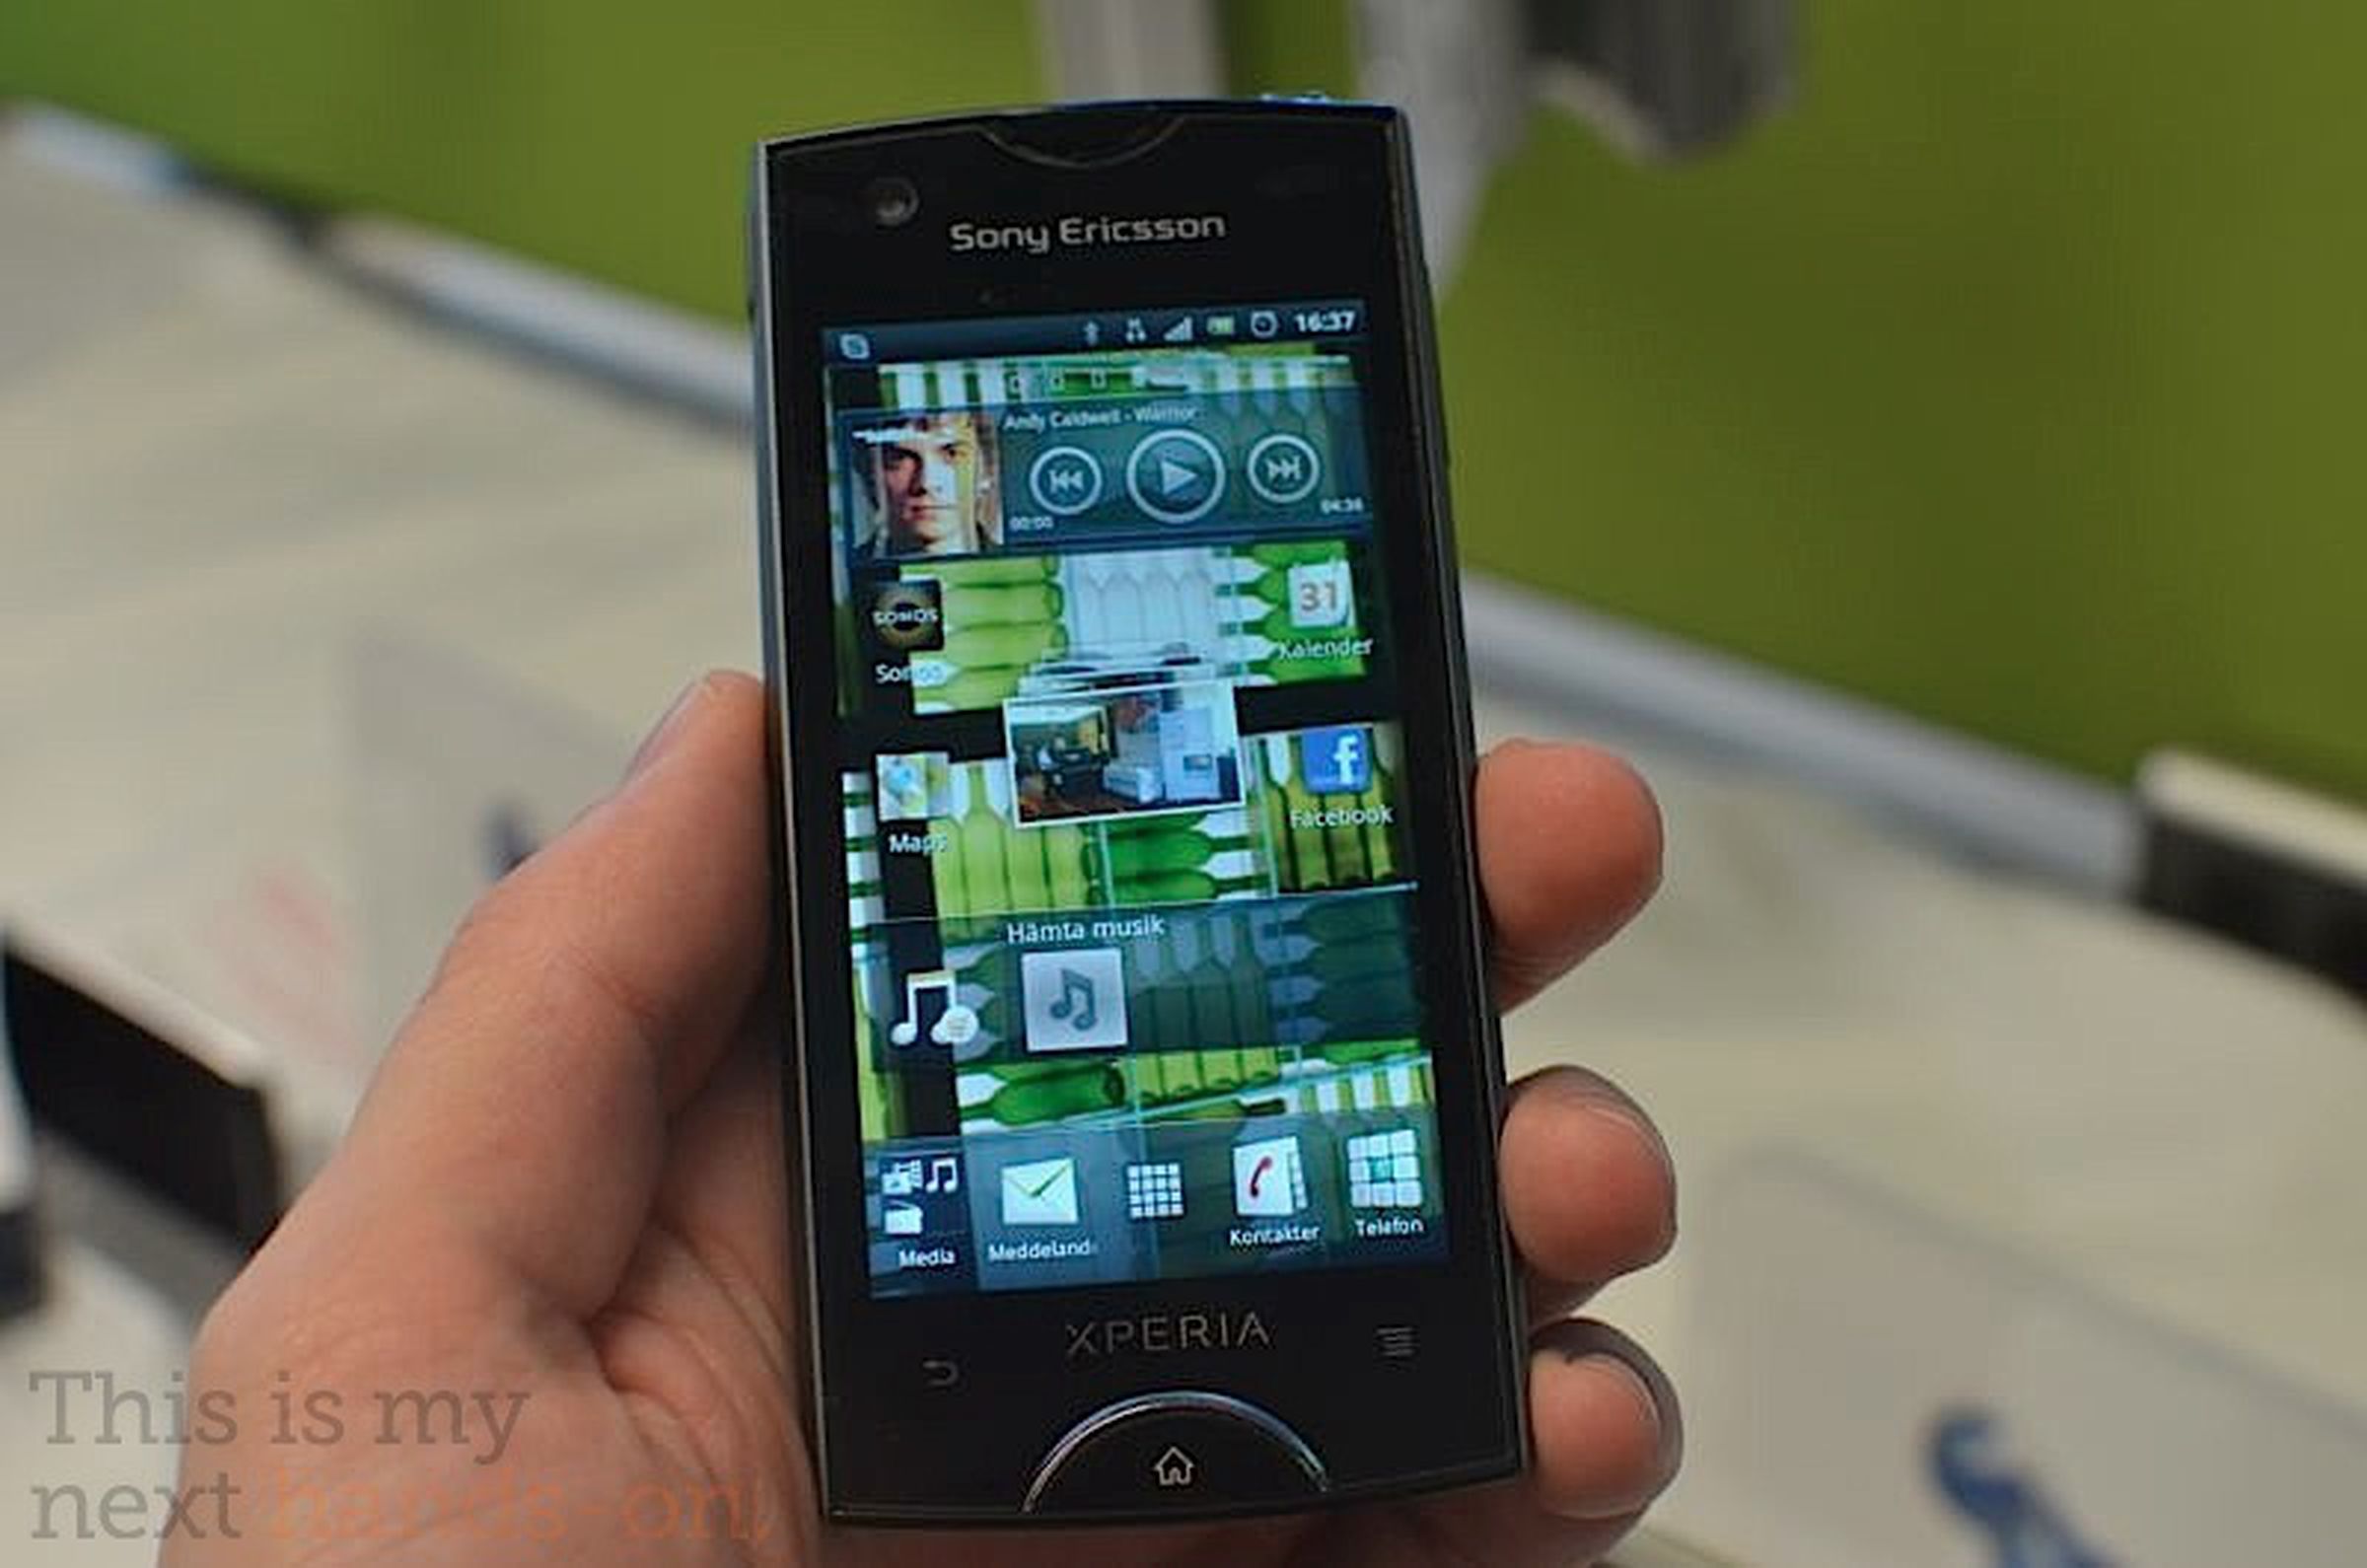 Sony Ericsson Xperia Ray hands on photos